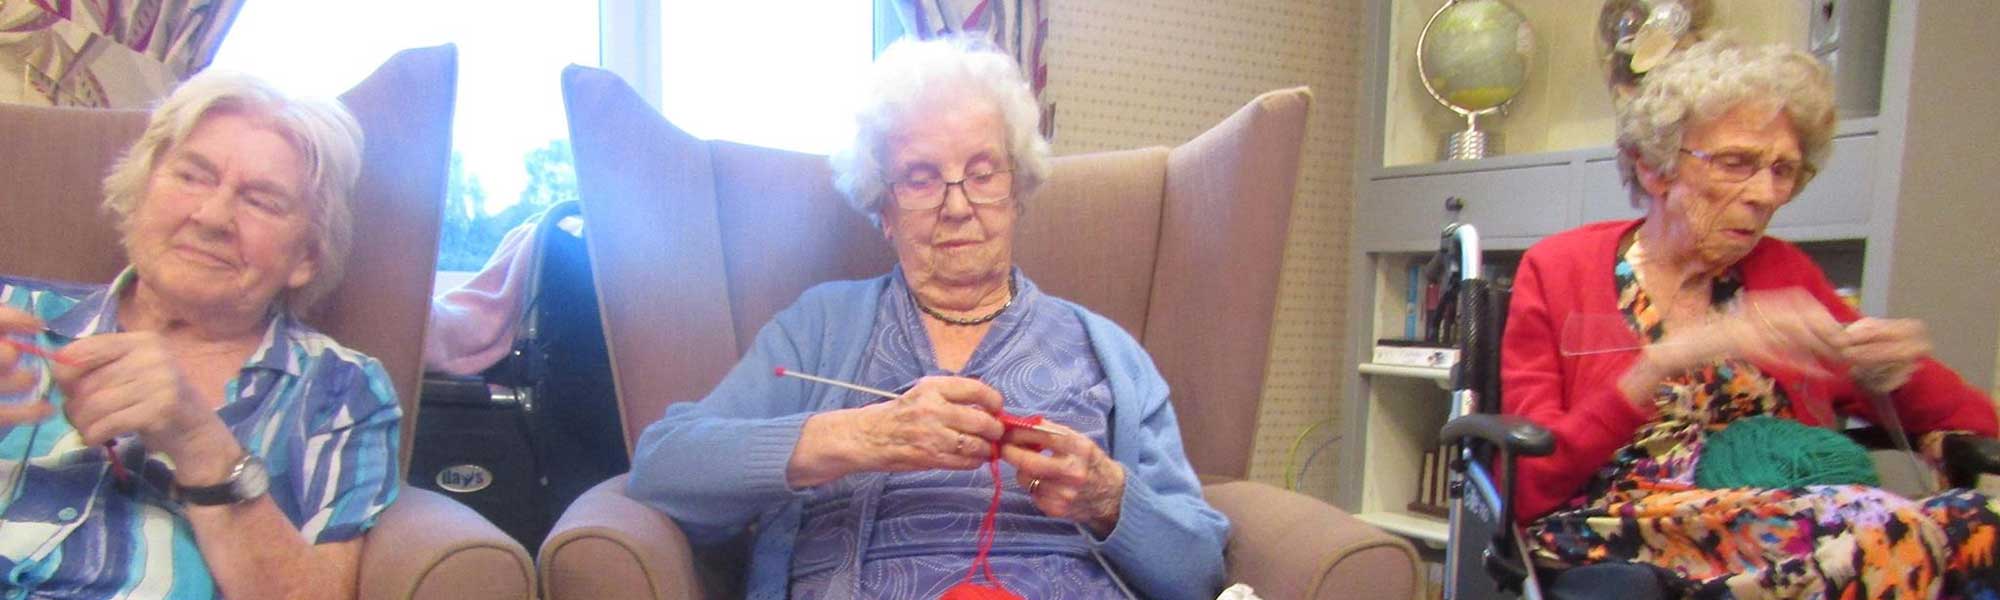 residents knitting